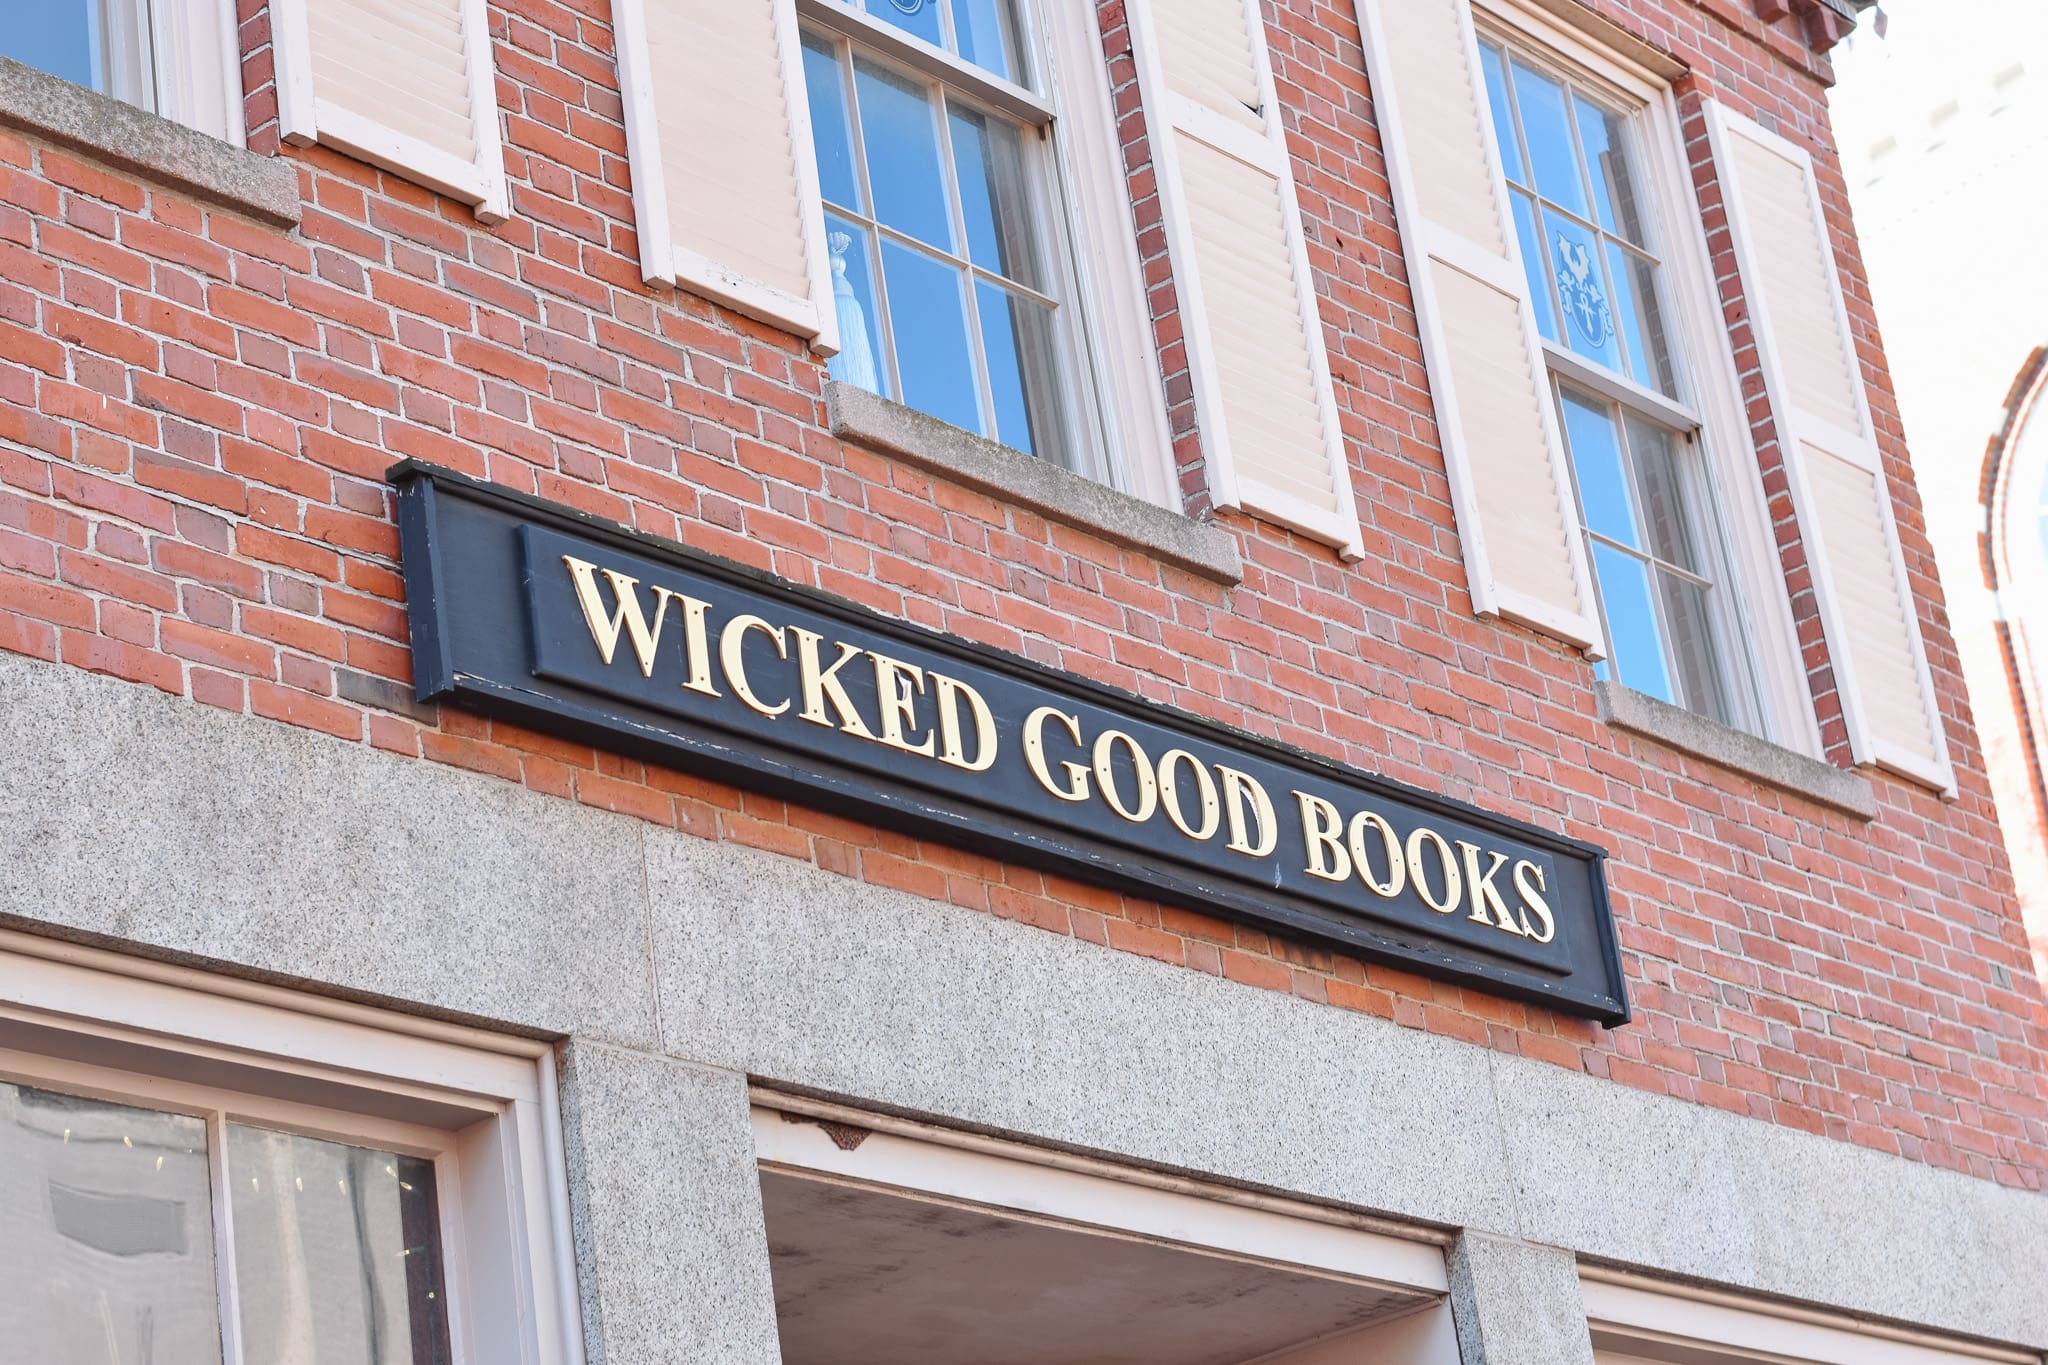 Wicked Good Books in Salem, Massachusetts